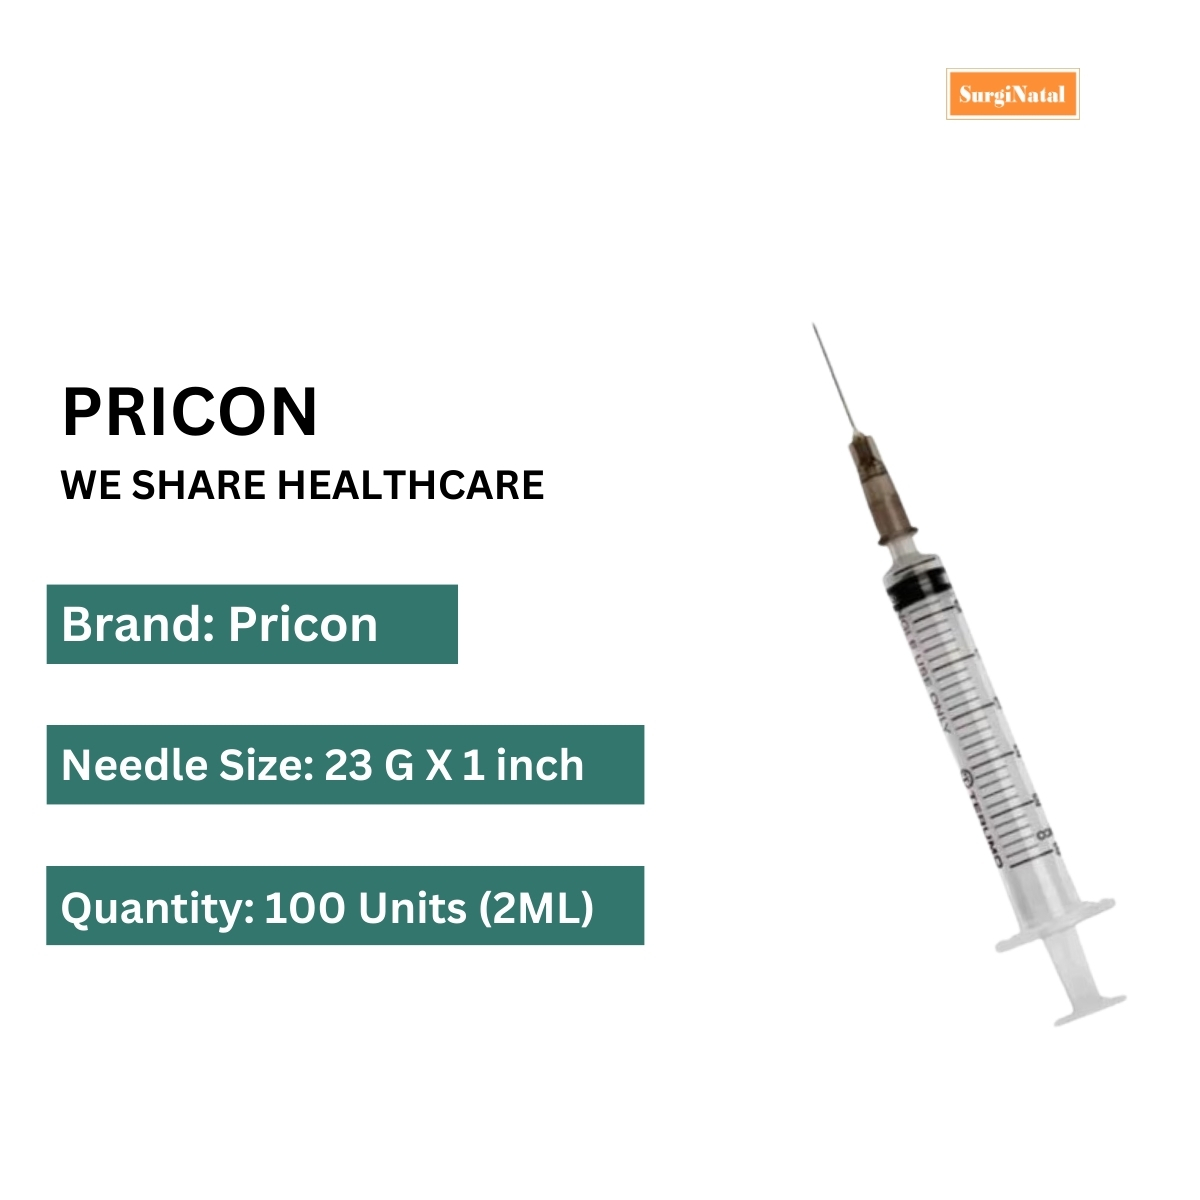 pricon 2ml syringe with needle - 100 units pack